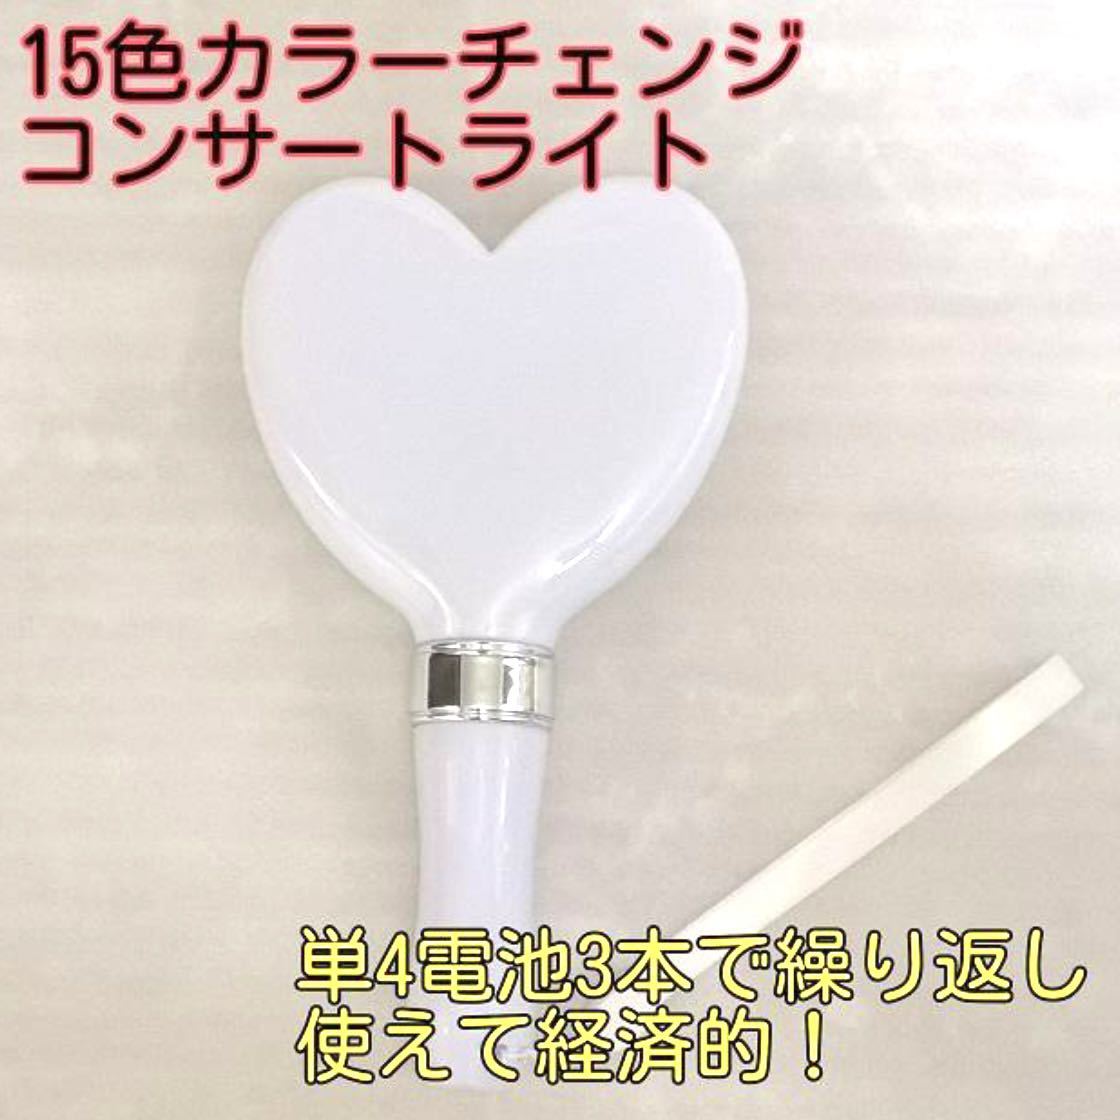  Heart свет носорог liumLED фонарик-ручка тонкий фонарик lai яркий палочка Event высокая яркость супер-легкий Heart 